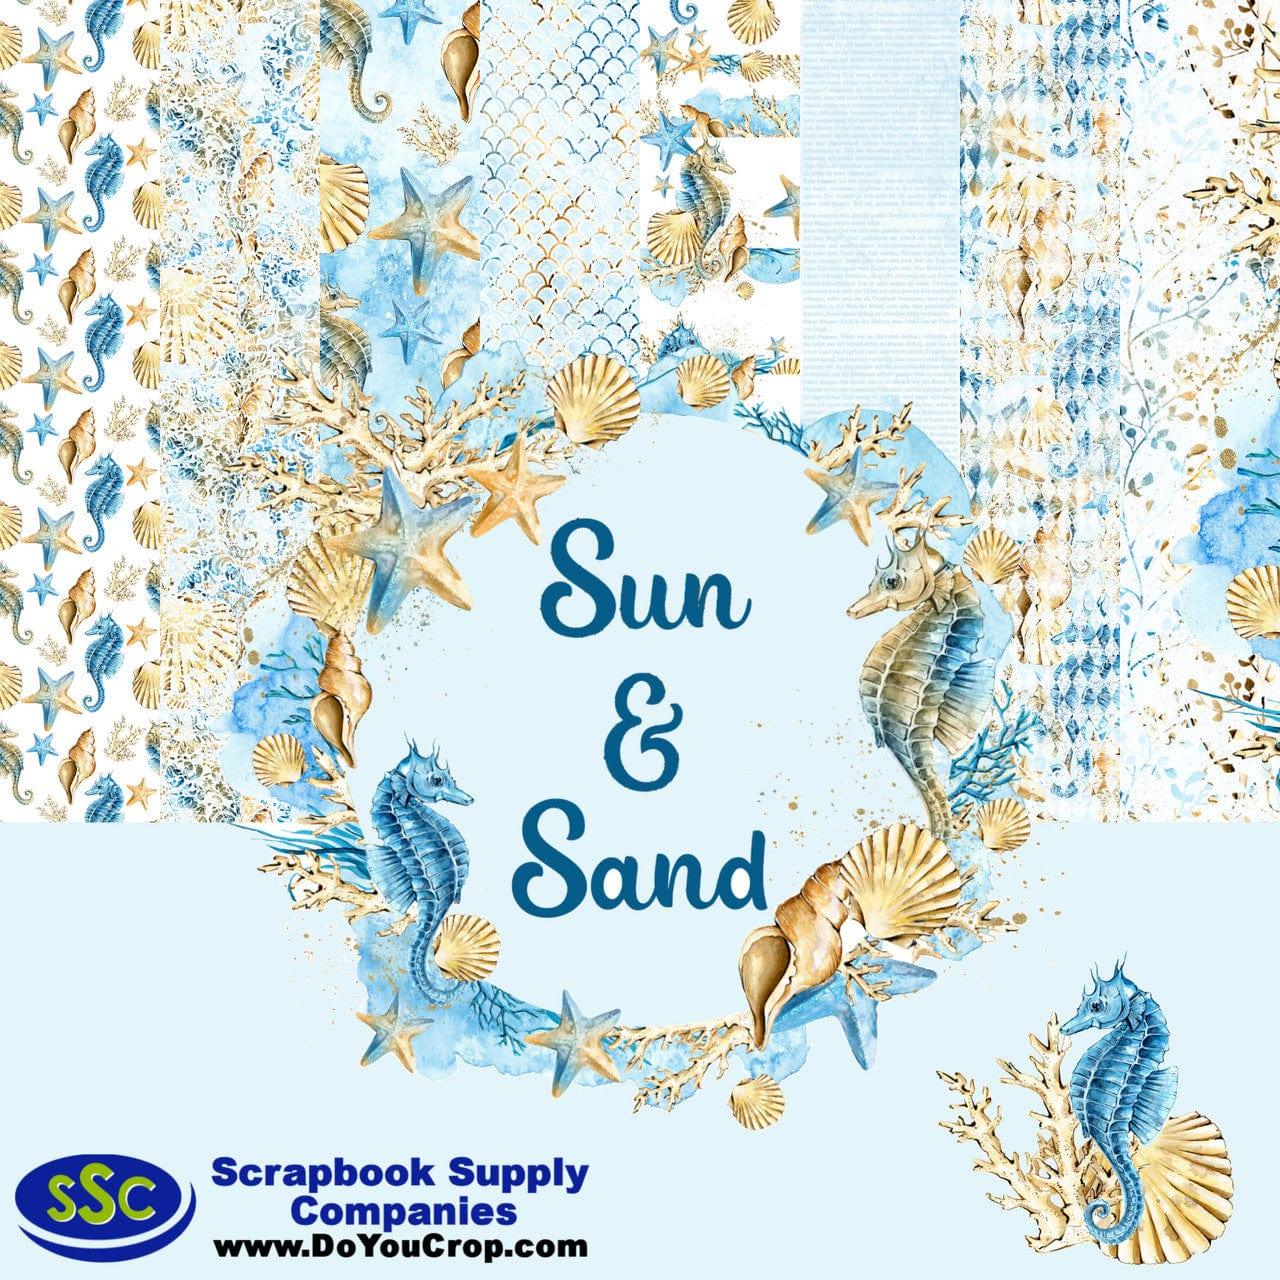 Sun & Sand 12 x 12 Scrapbook Paper & Embellishment Kit by SSC Designs